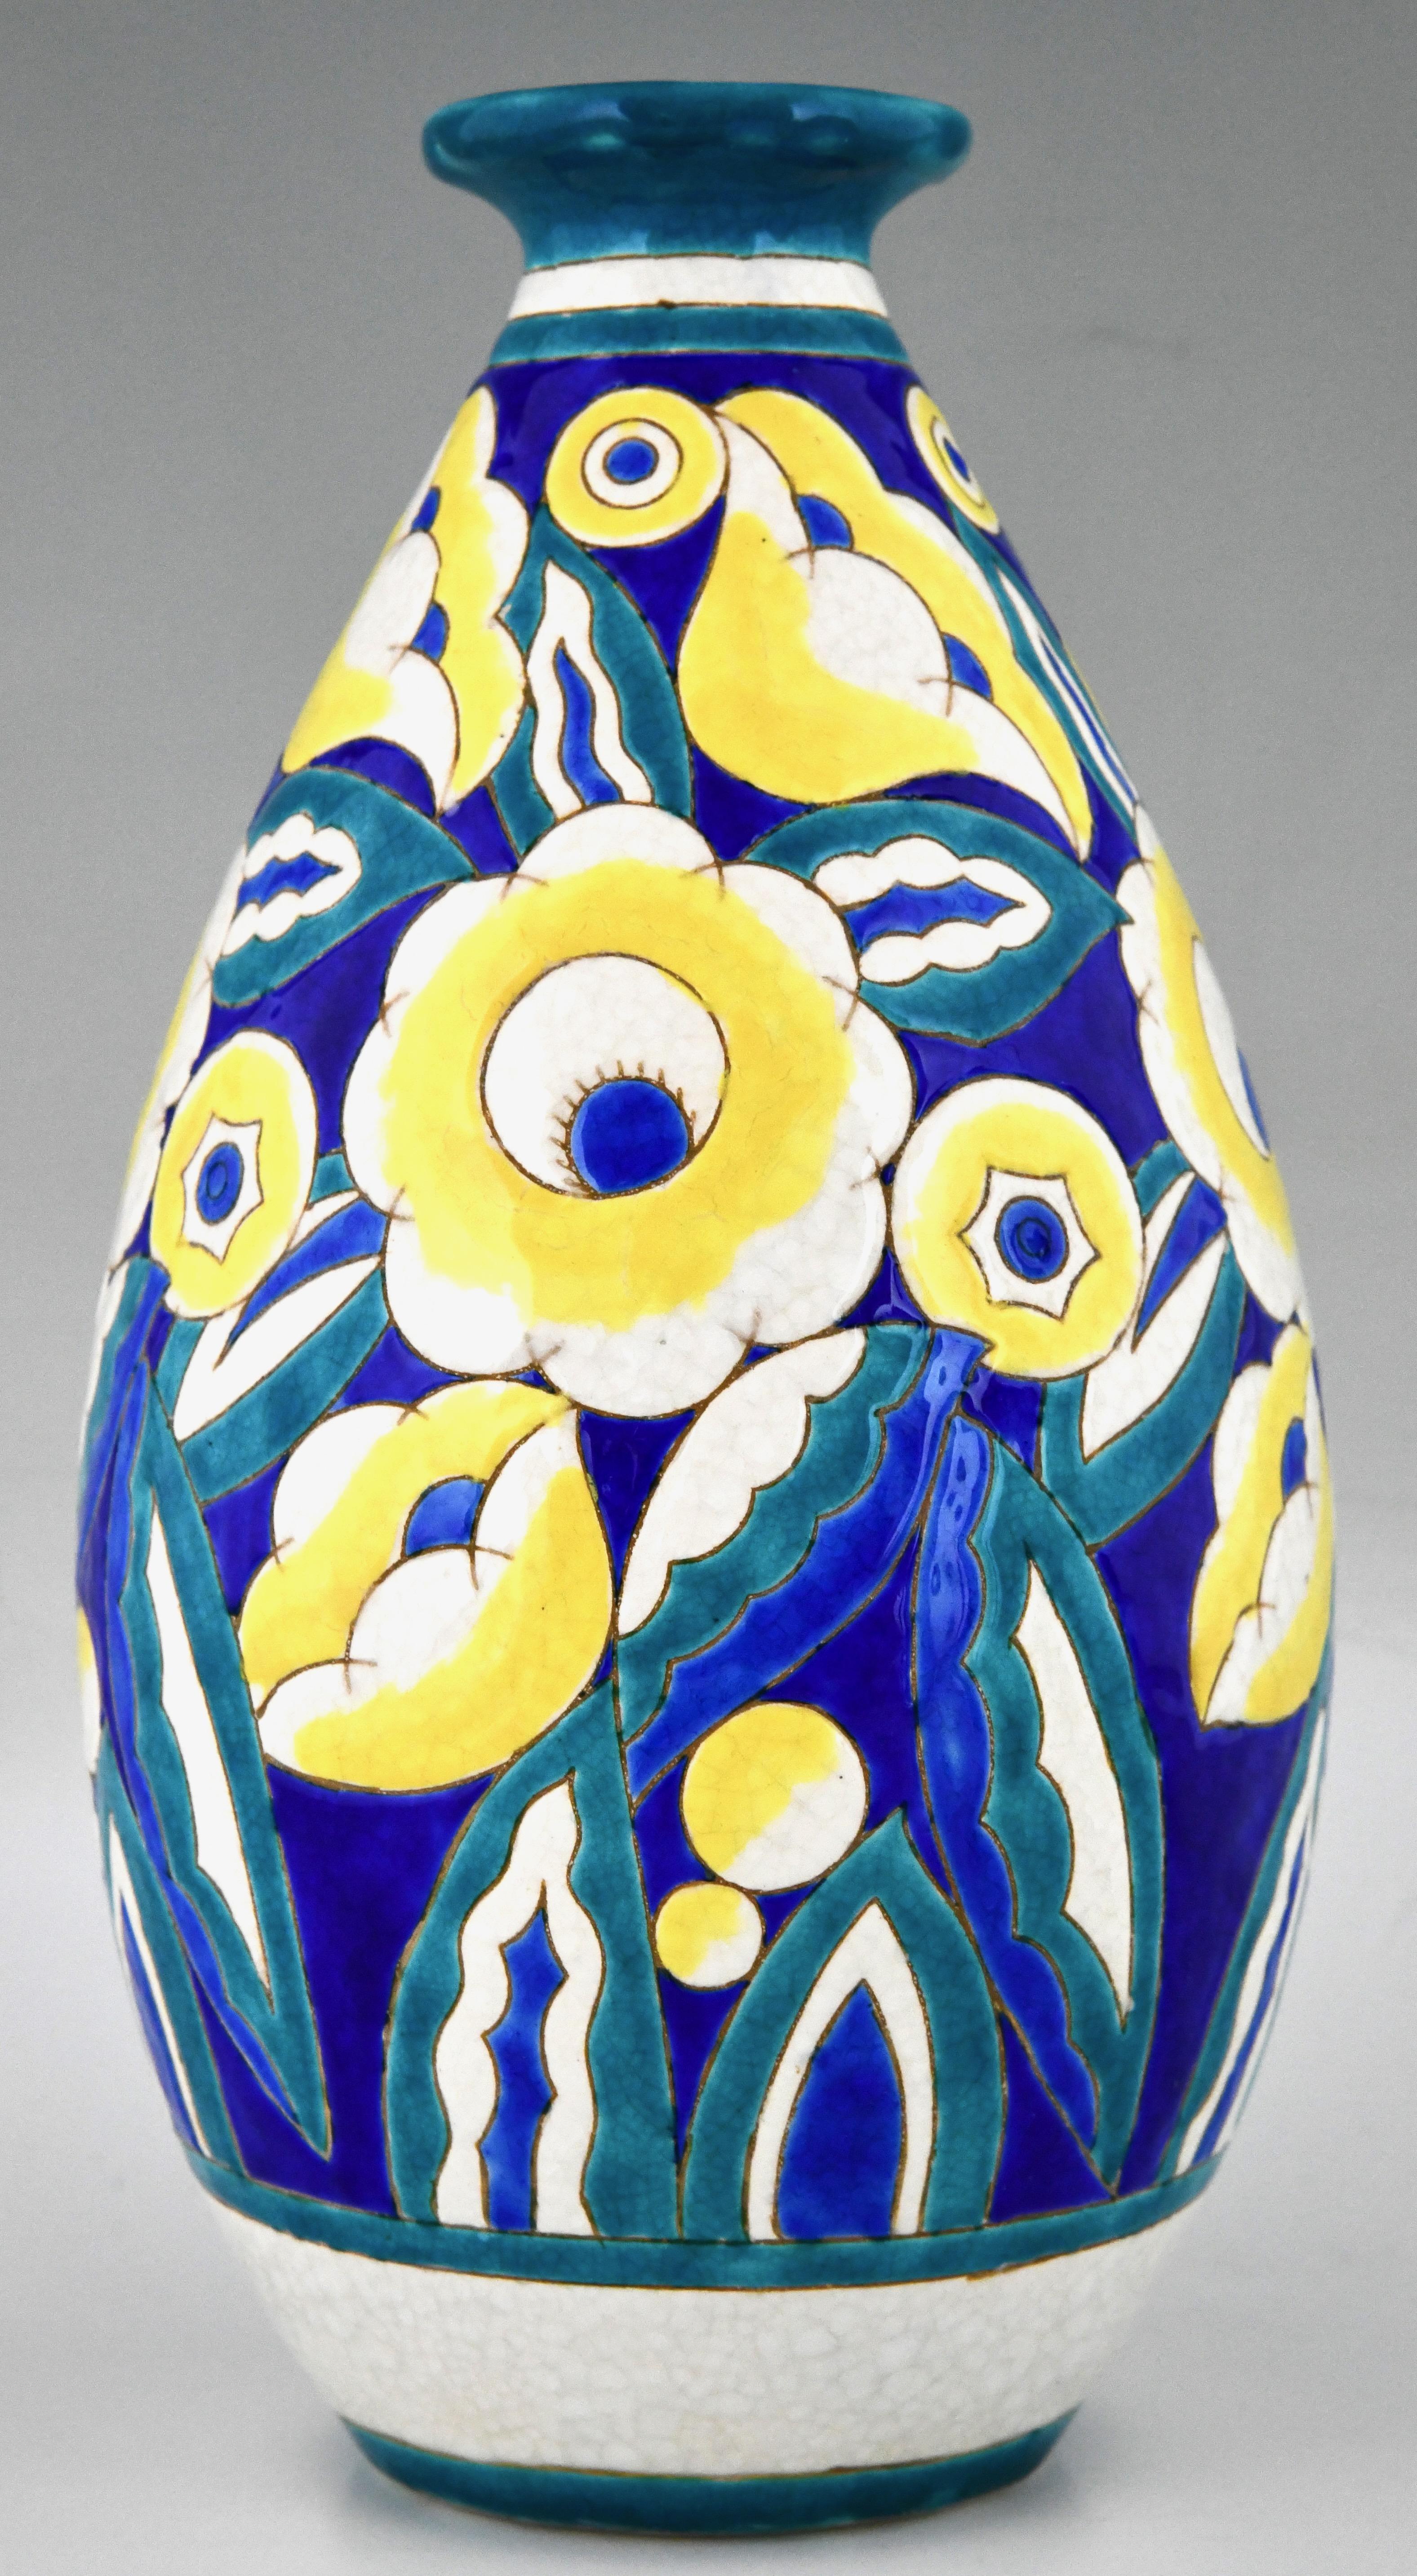 Belgian Pair of Art Deco Ceramic Vases with Flowers by Keramis, Belgium 1932 For Sale